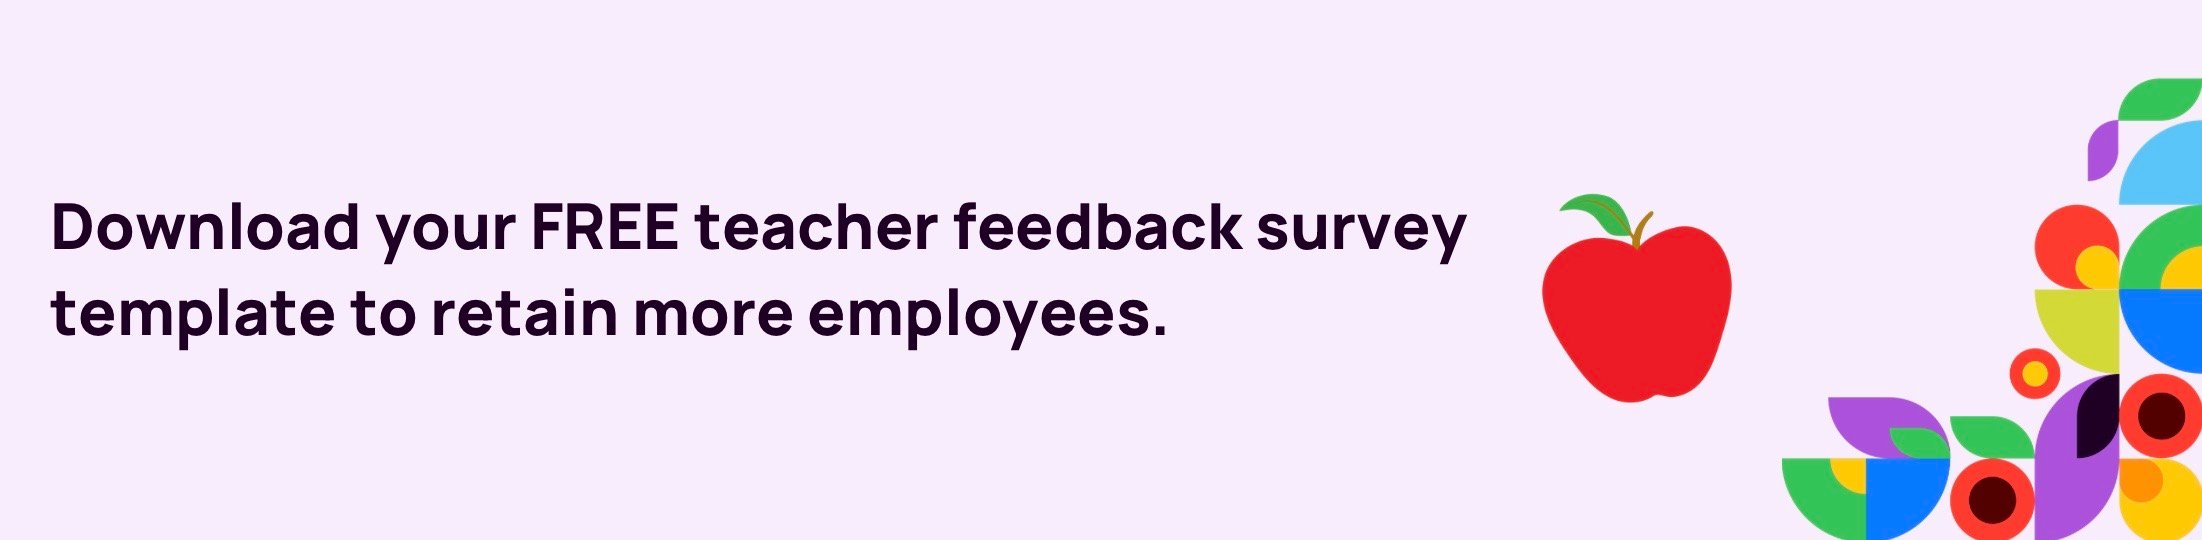 teacher feedback survey template